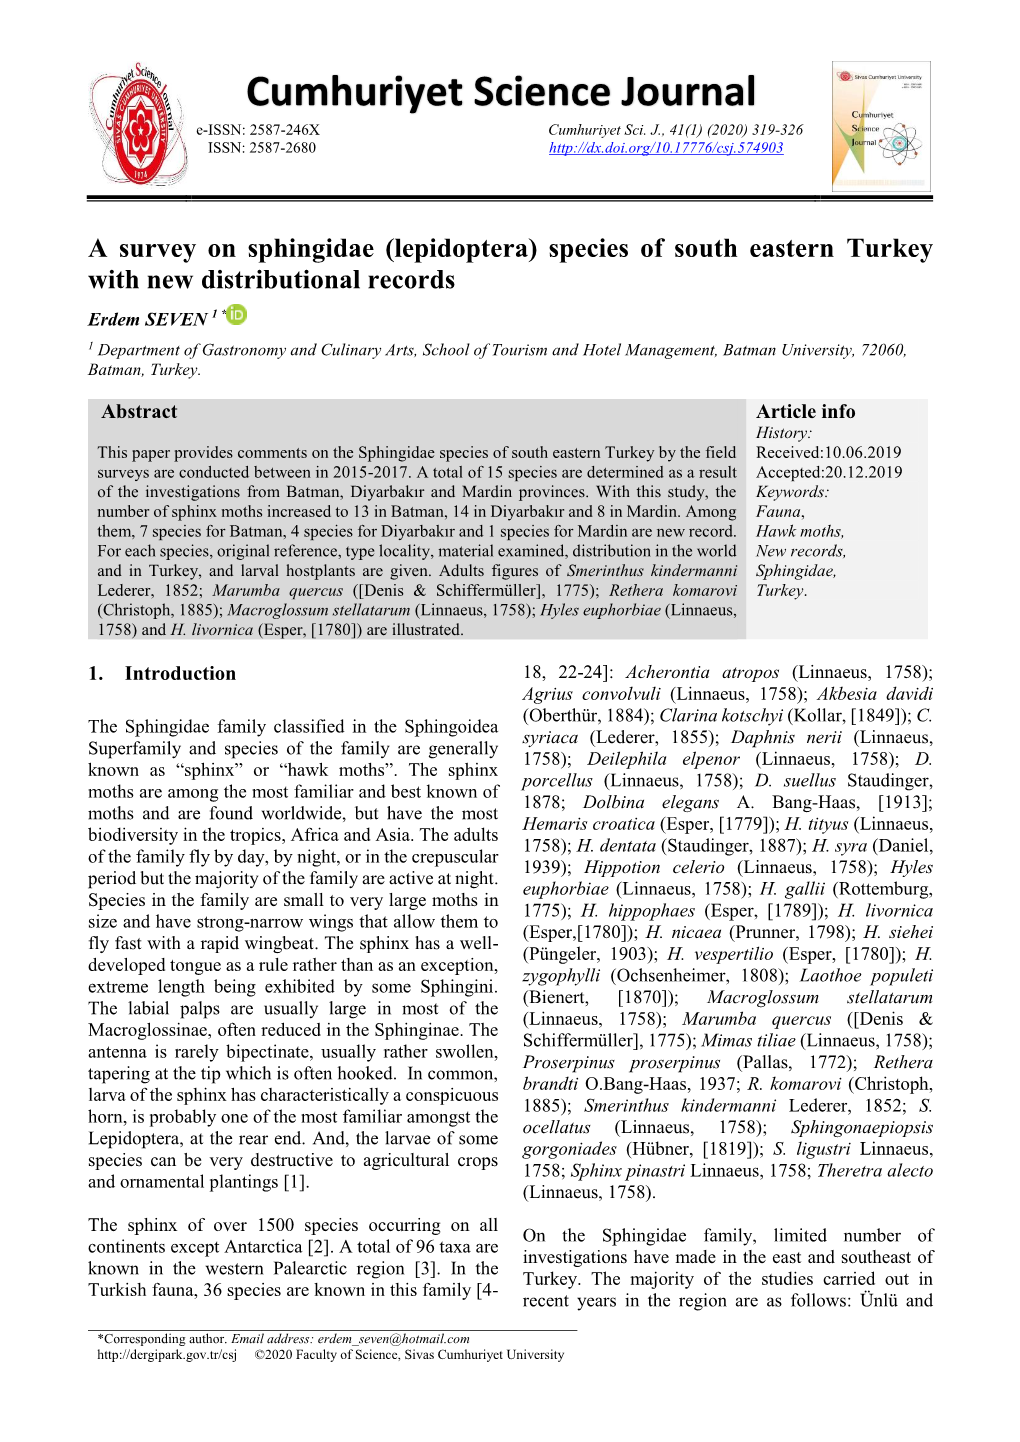 A Survey on Sphingidae (Lepidoptera) Species of South Eastern Turkey